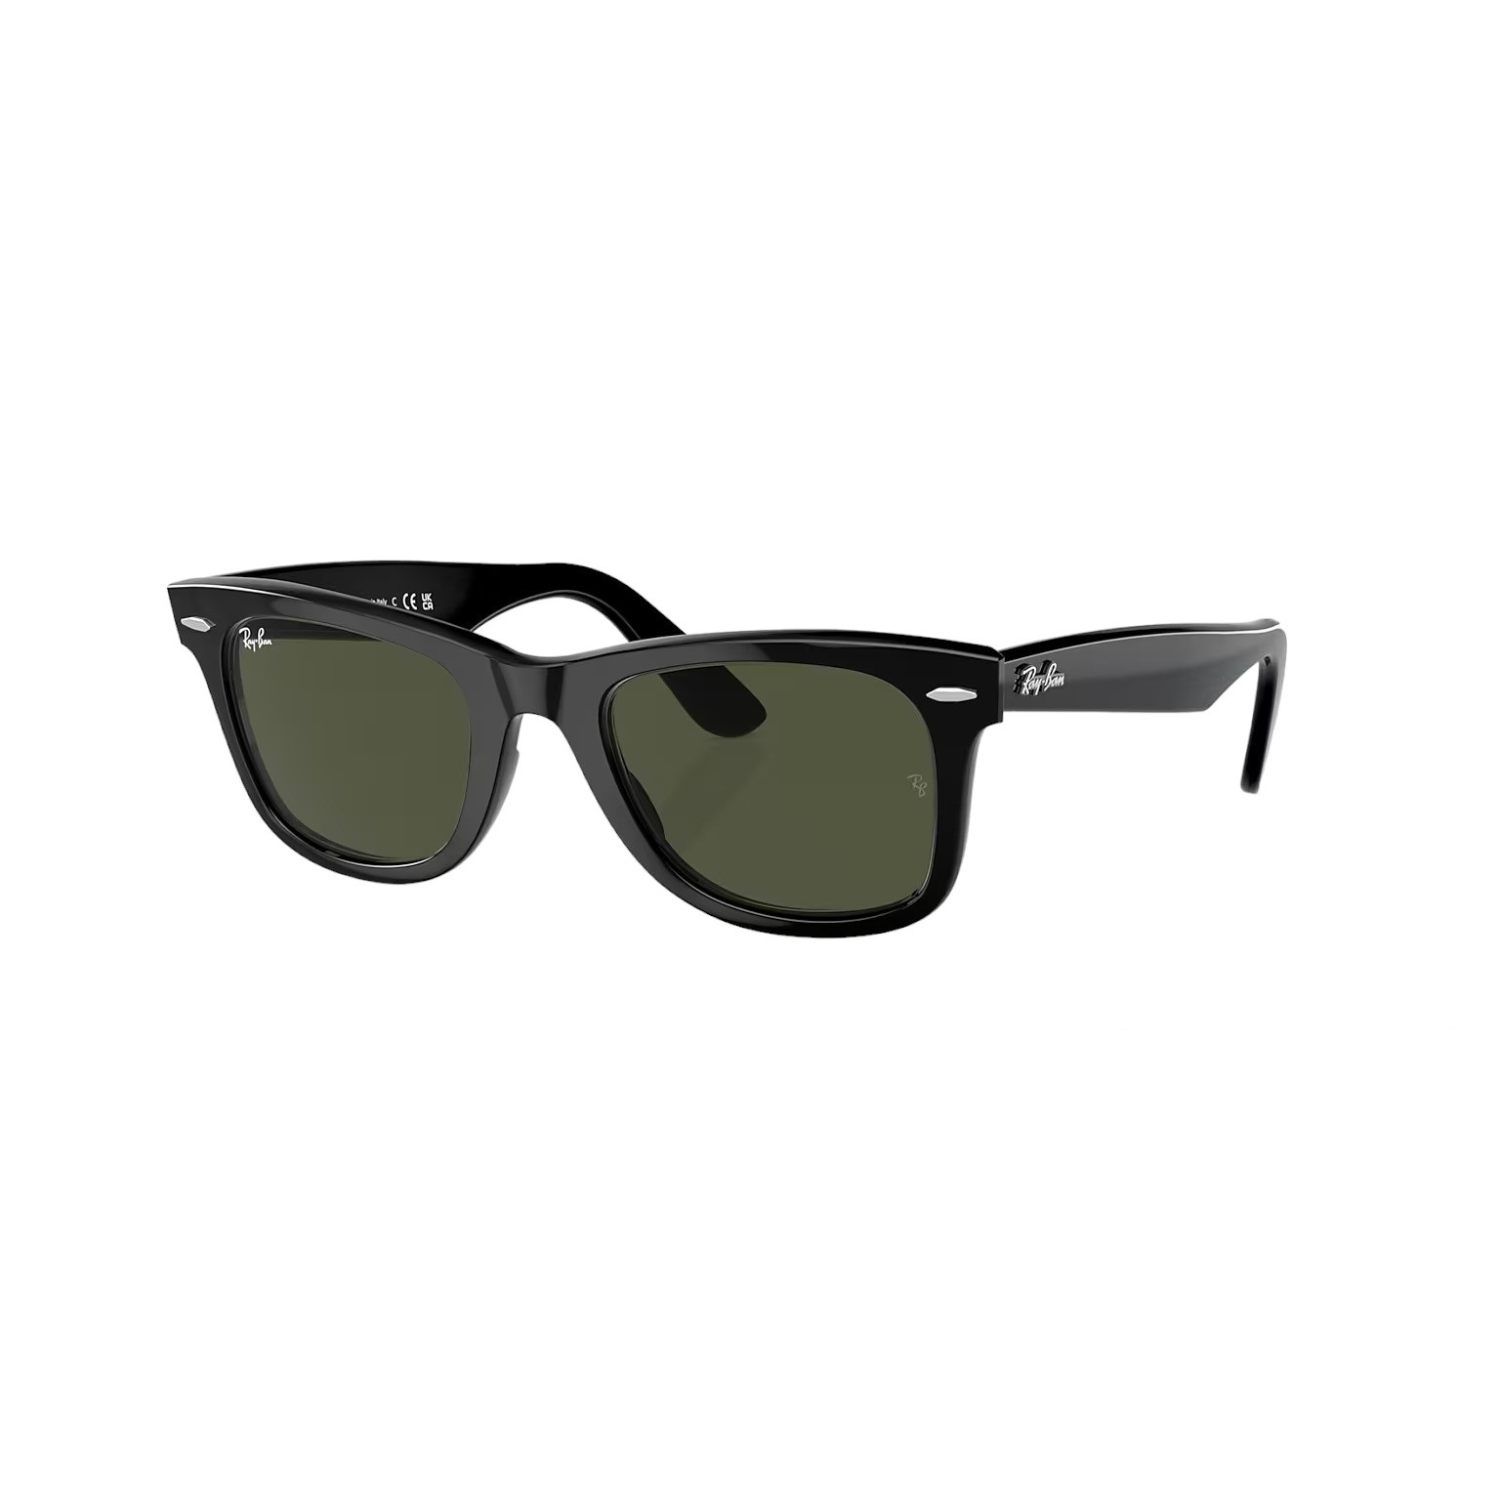 RB2140 901 Wayfarer Classic Sunglasses - size 54